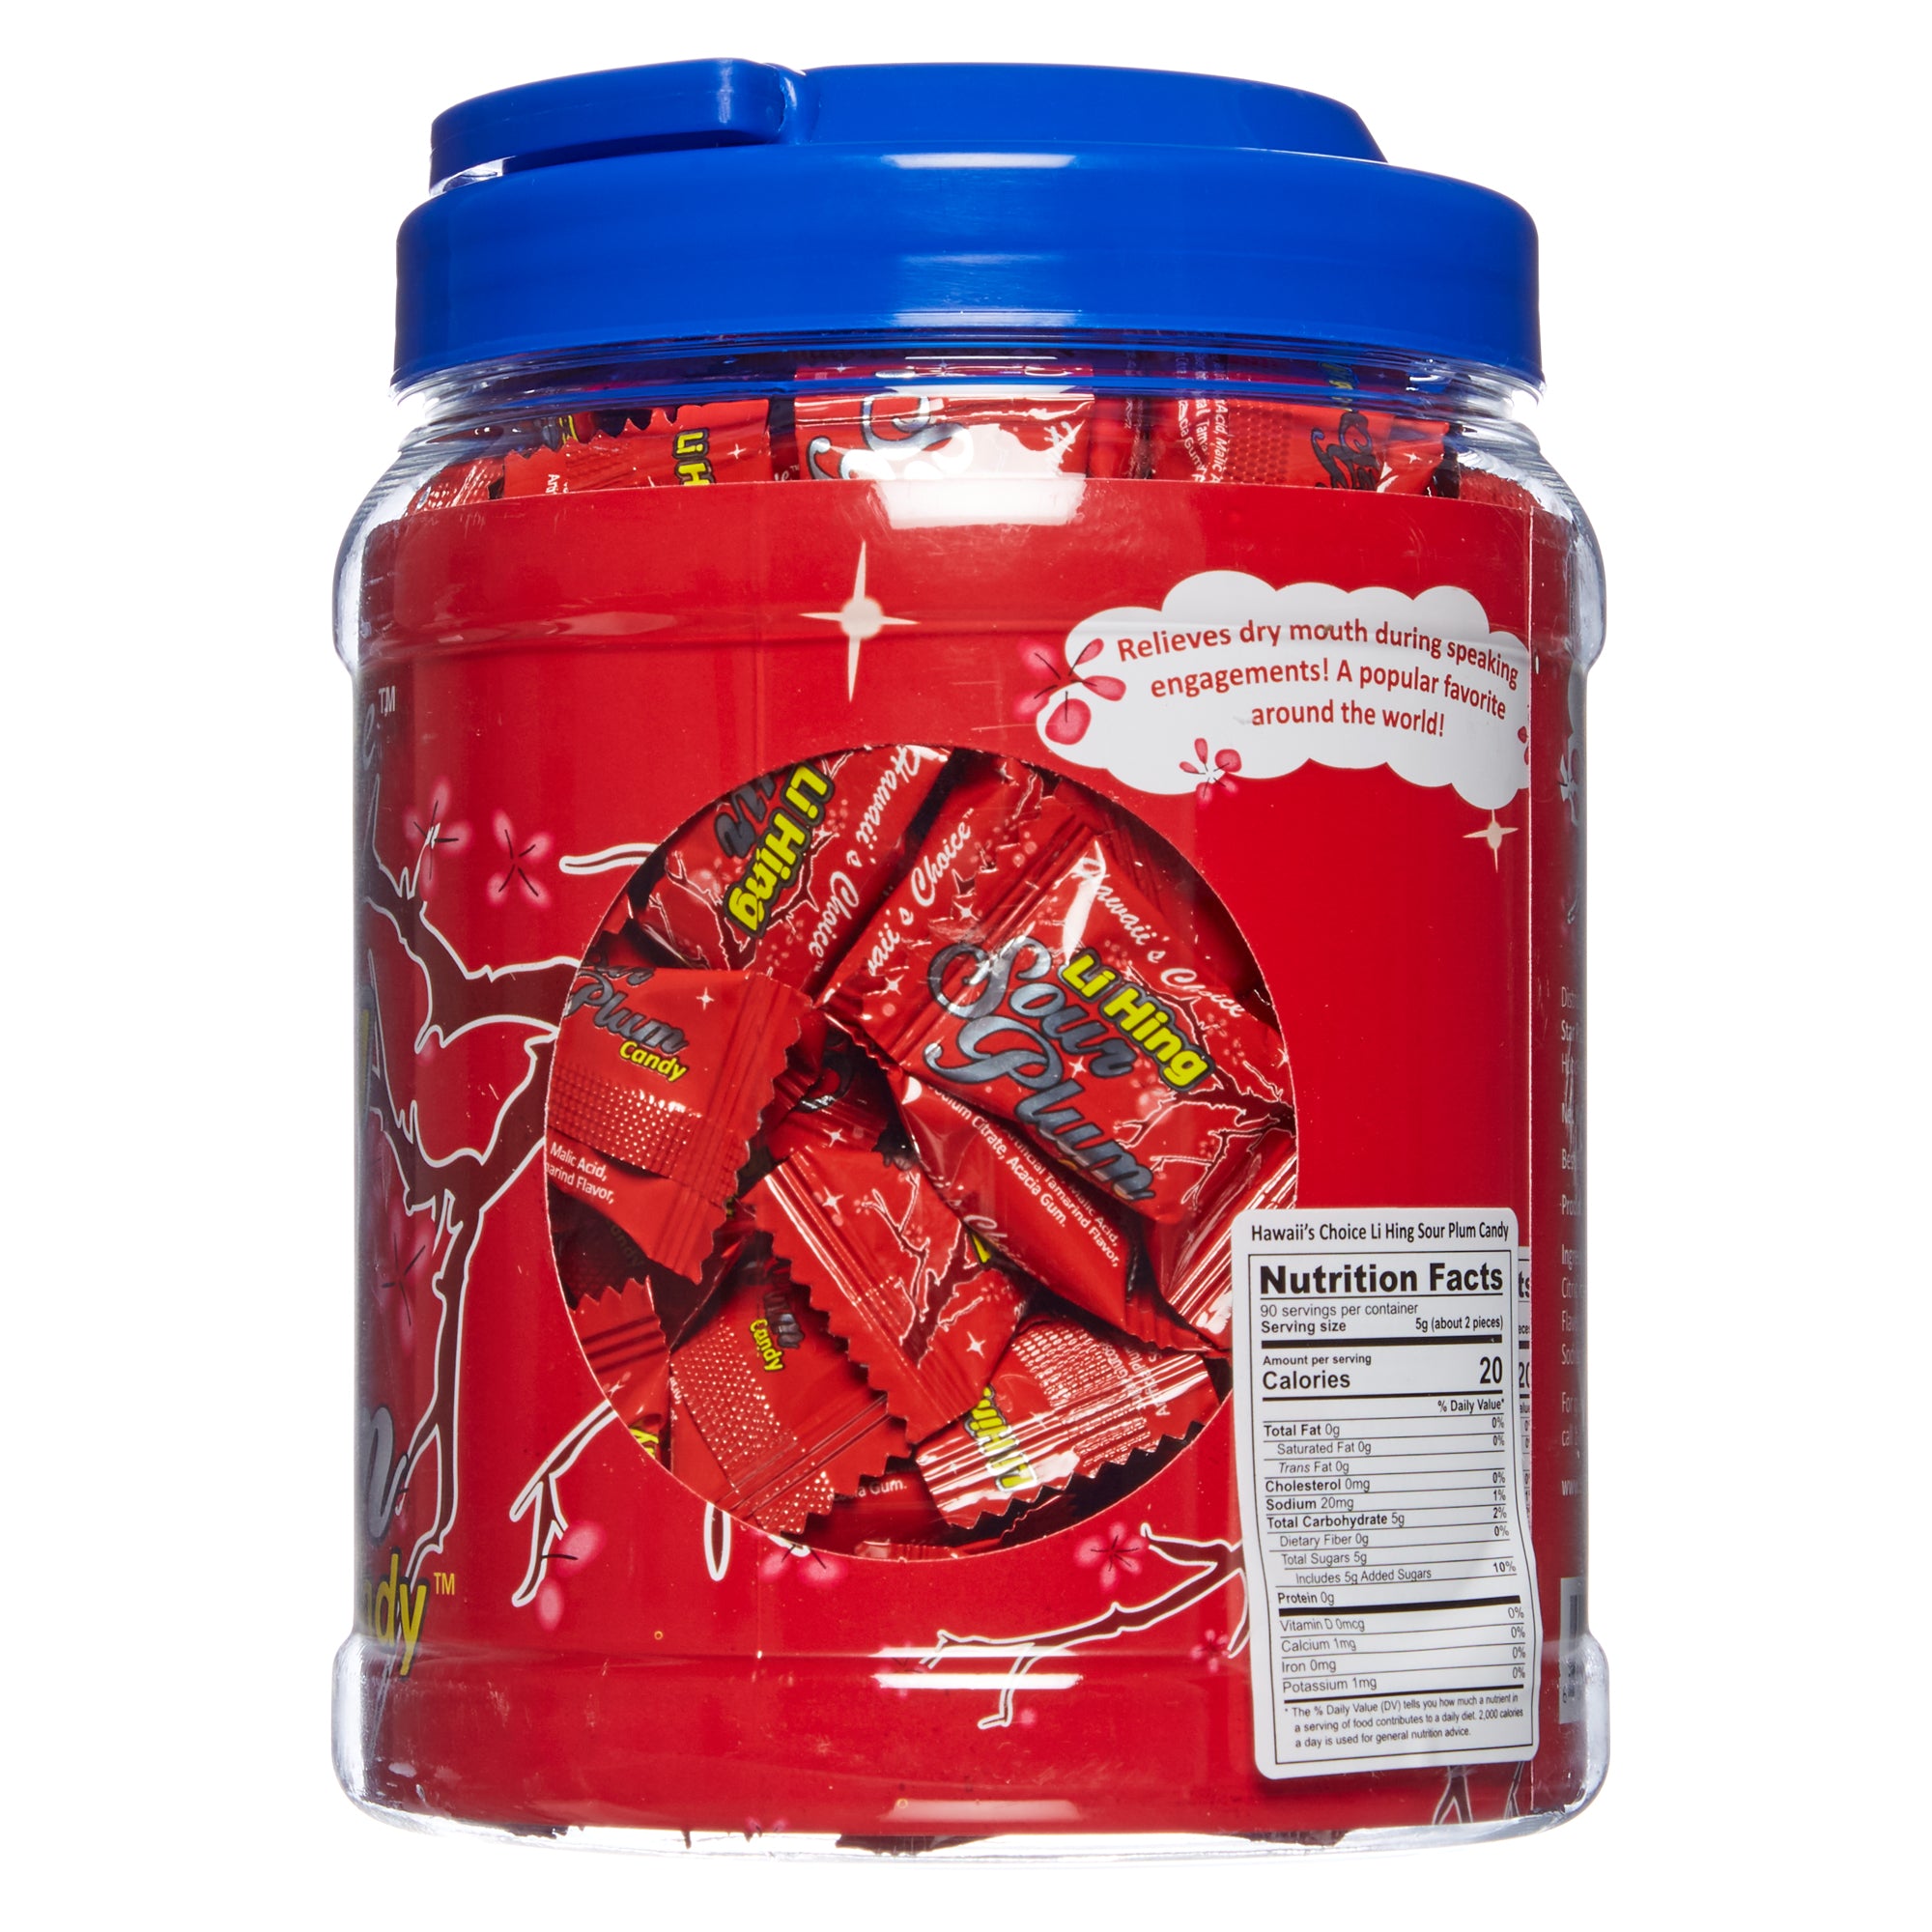 Hawaii's Choice Li Hing Hawaiian Hard Candy - Dual 1lb Sour Plum Jars, Individually Wrapped Mouth-Watering Candies - Reg. $19.48/jar, 10% Special@ $17.52/jar (USD)